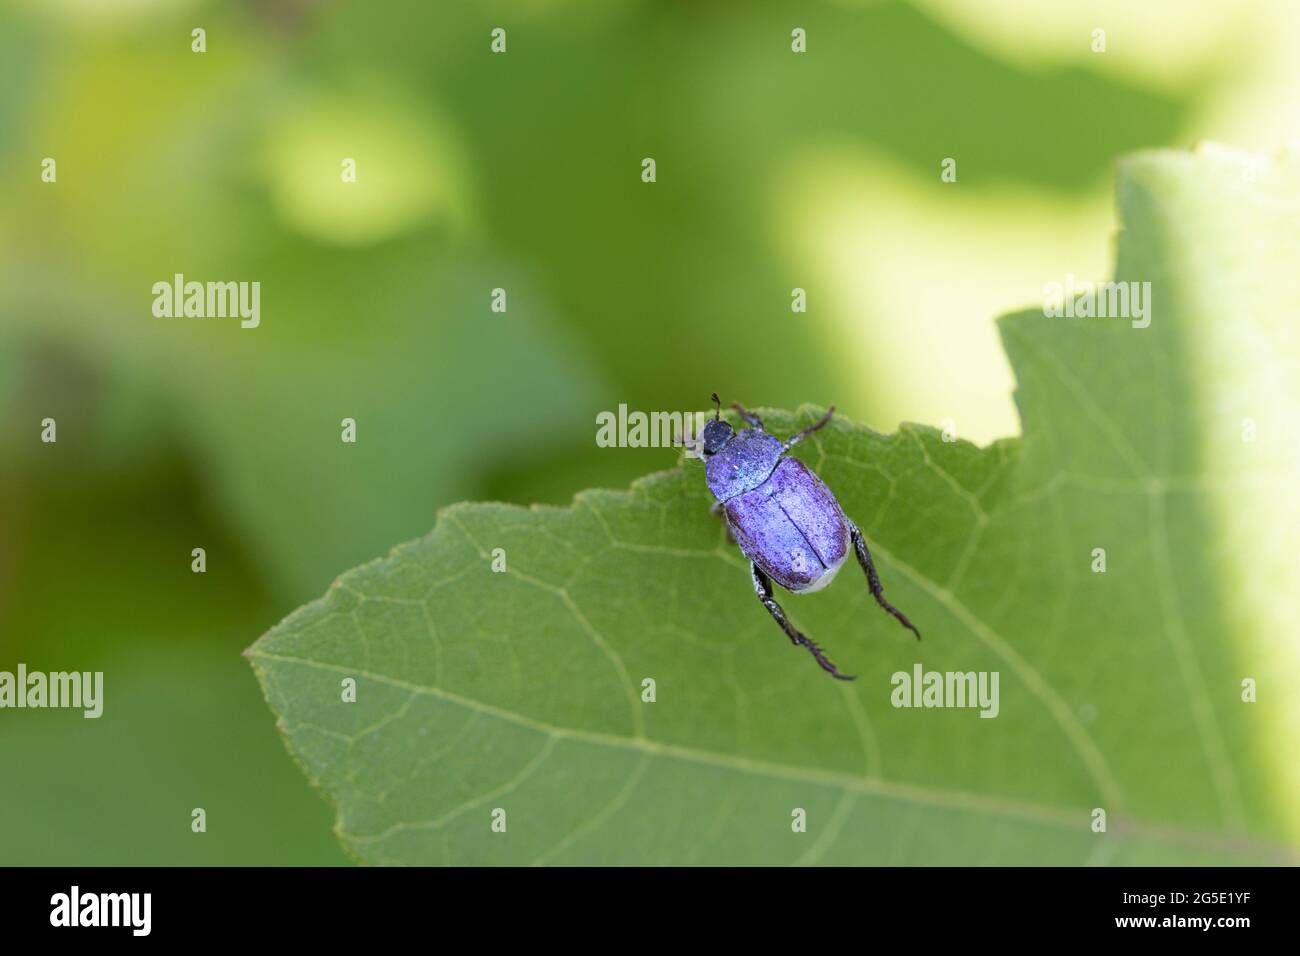 Blue Monkey Beetle Hoplia coerulea on low vegetation along the Loire, France Stock Photo